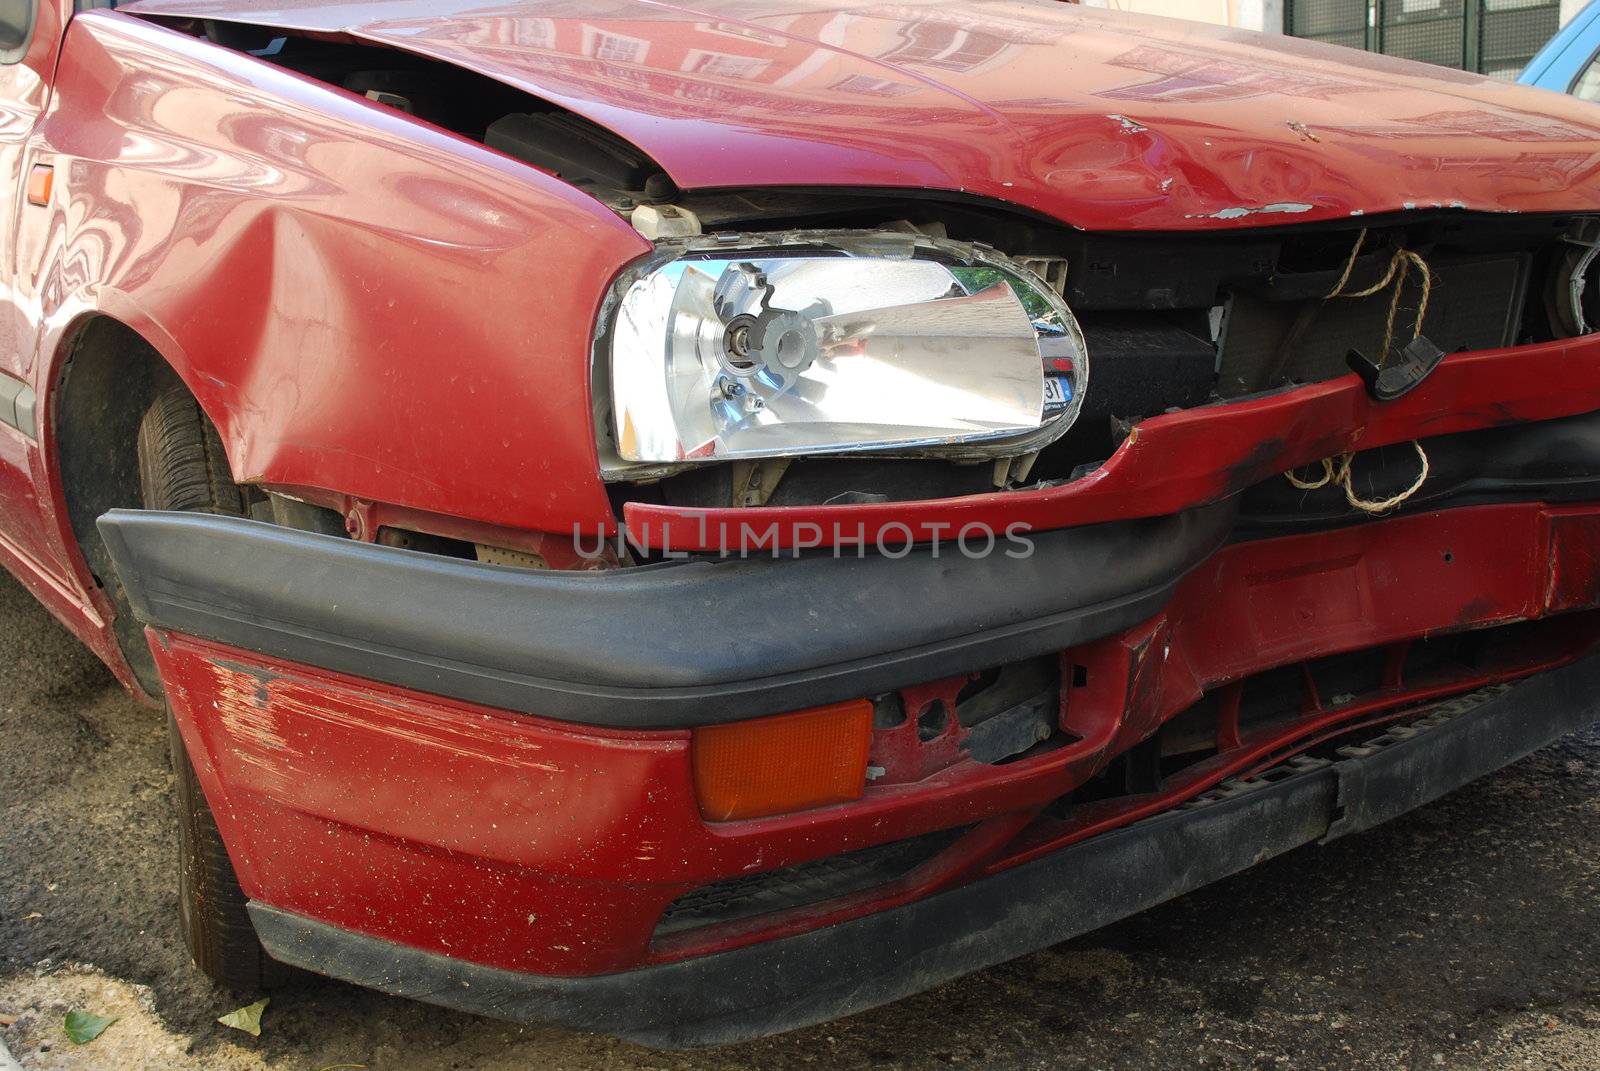 close up of a car front crashed/damaged